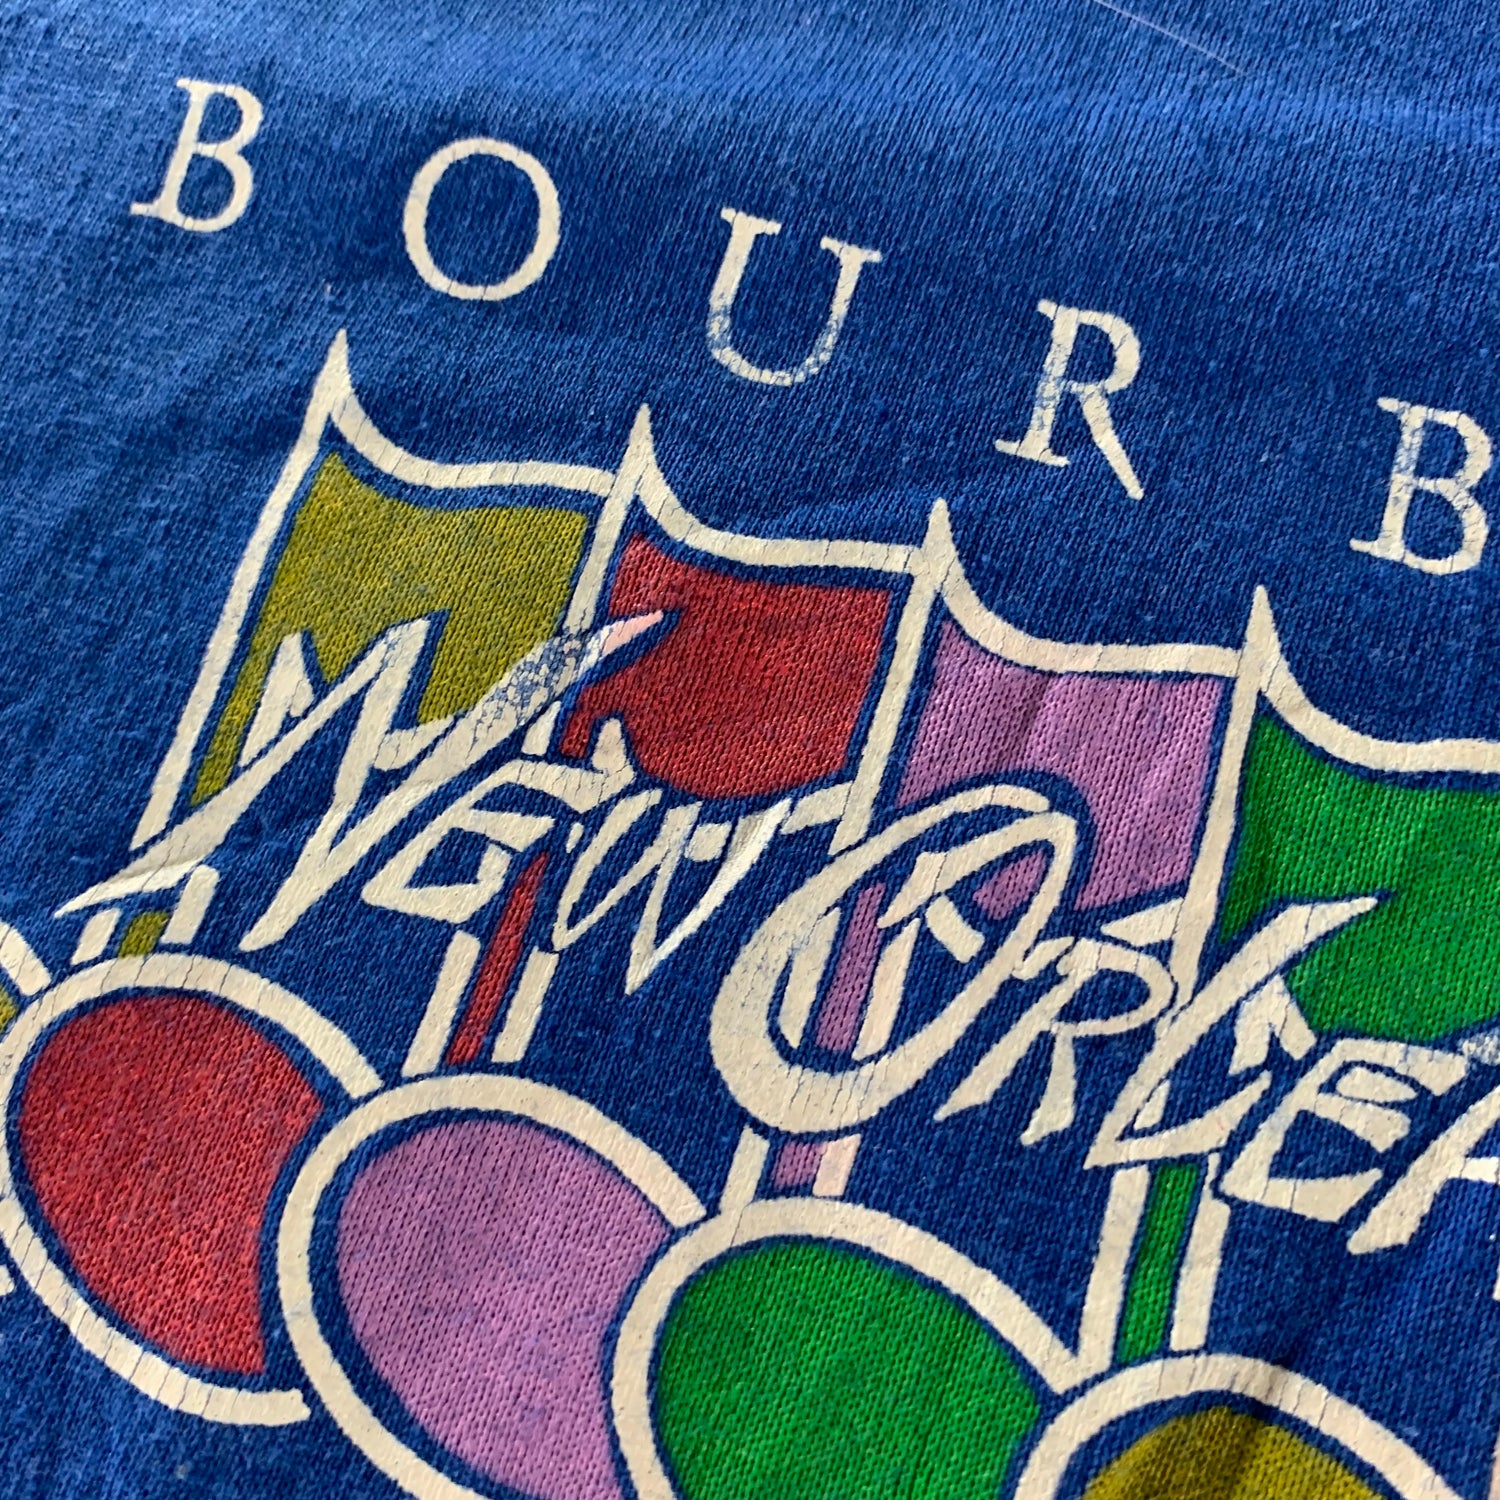 Vintage 1980s New Orleans Bourbon Street T-shirt size Large